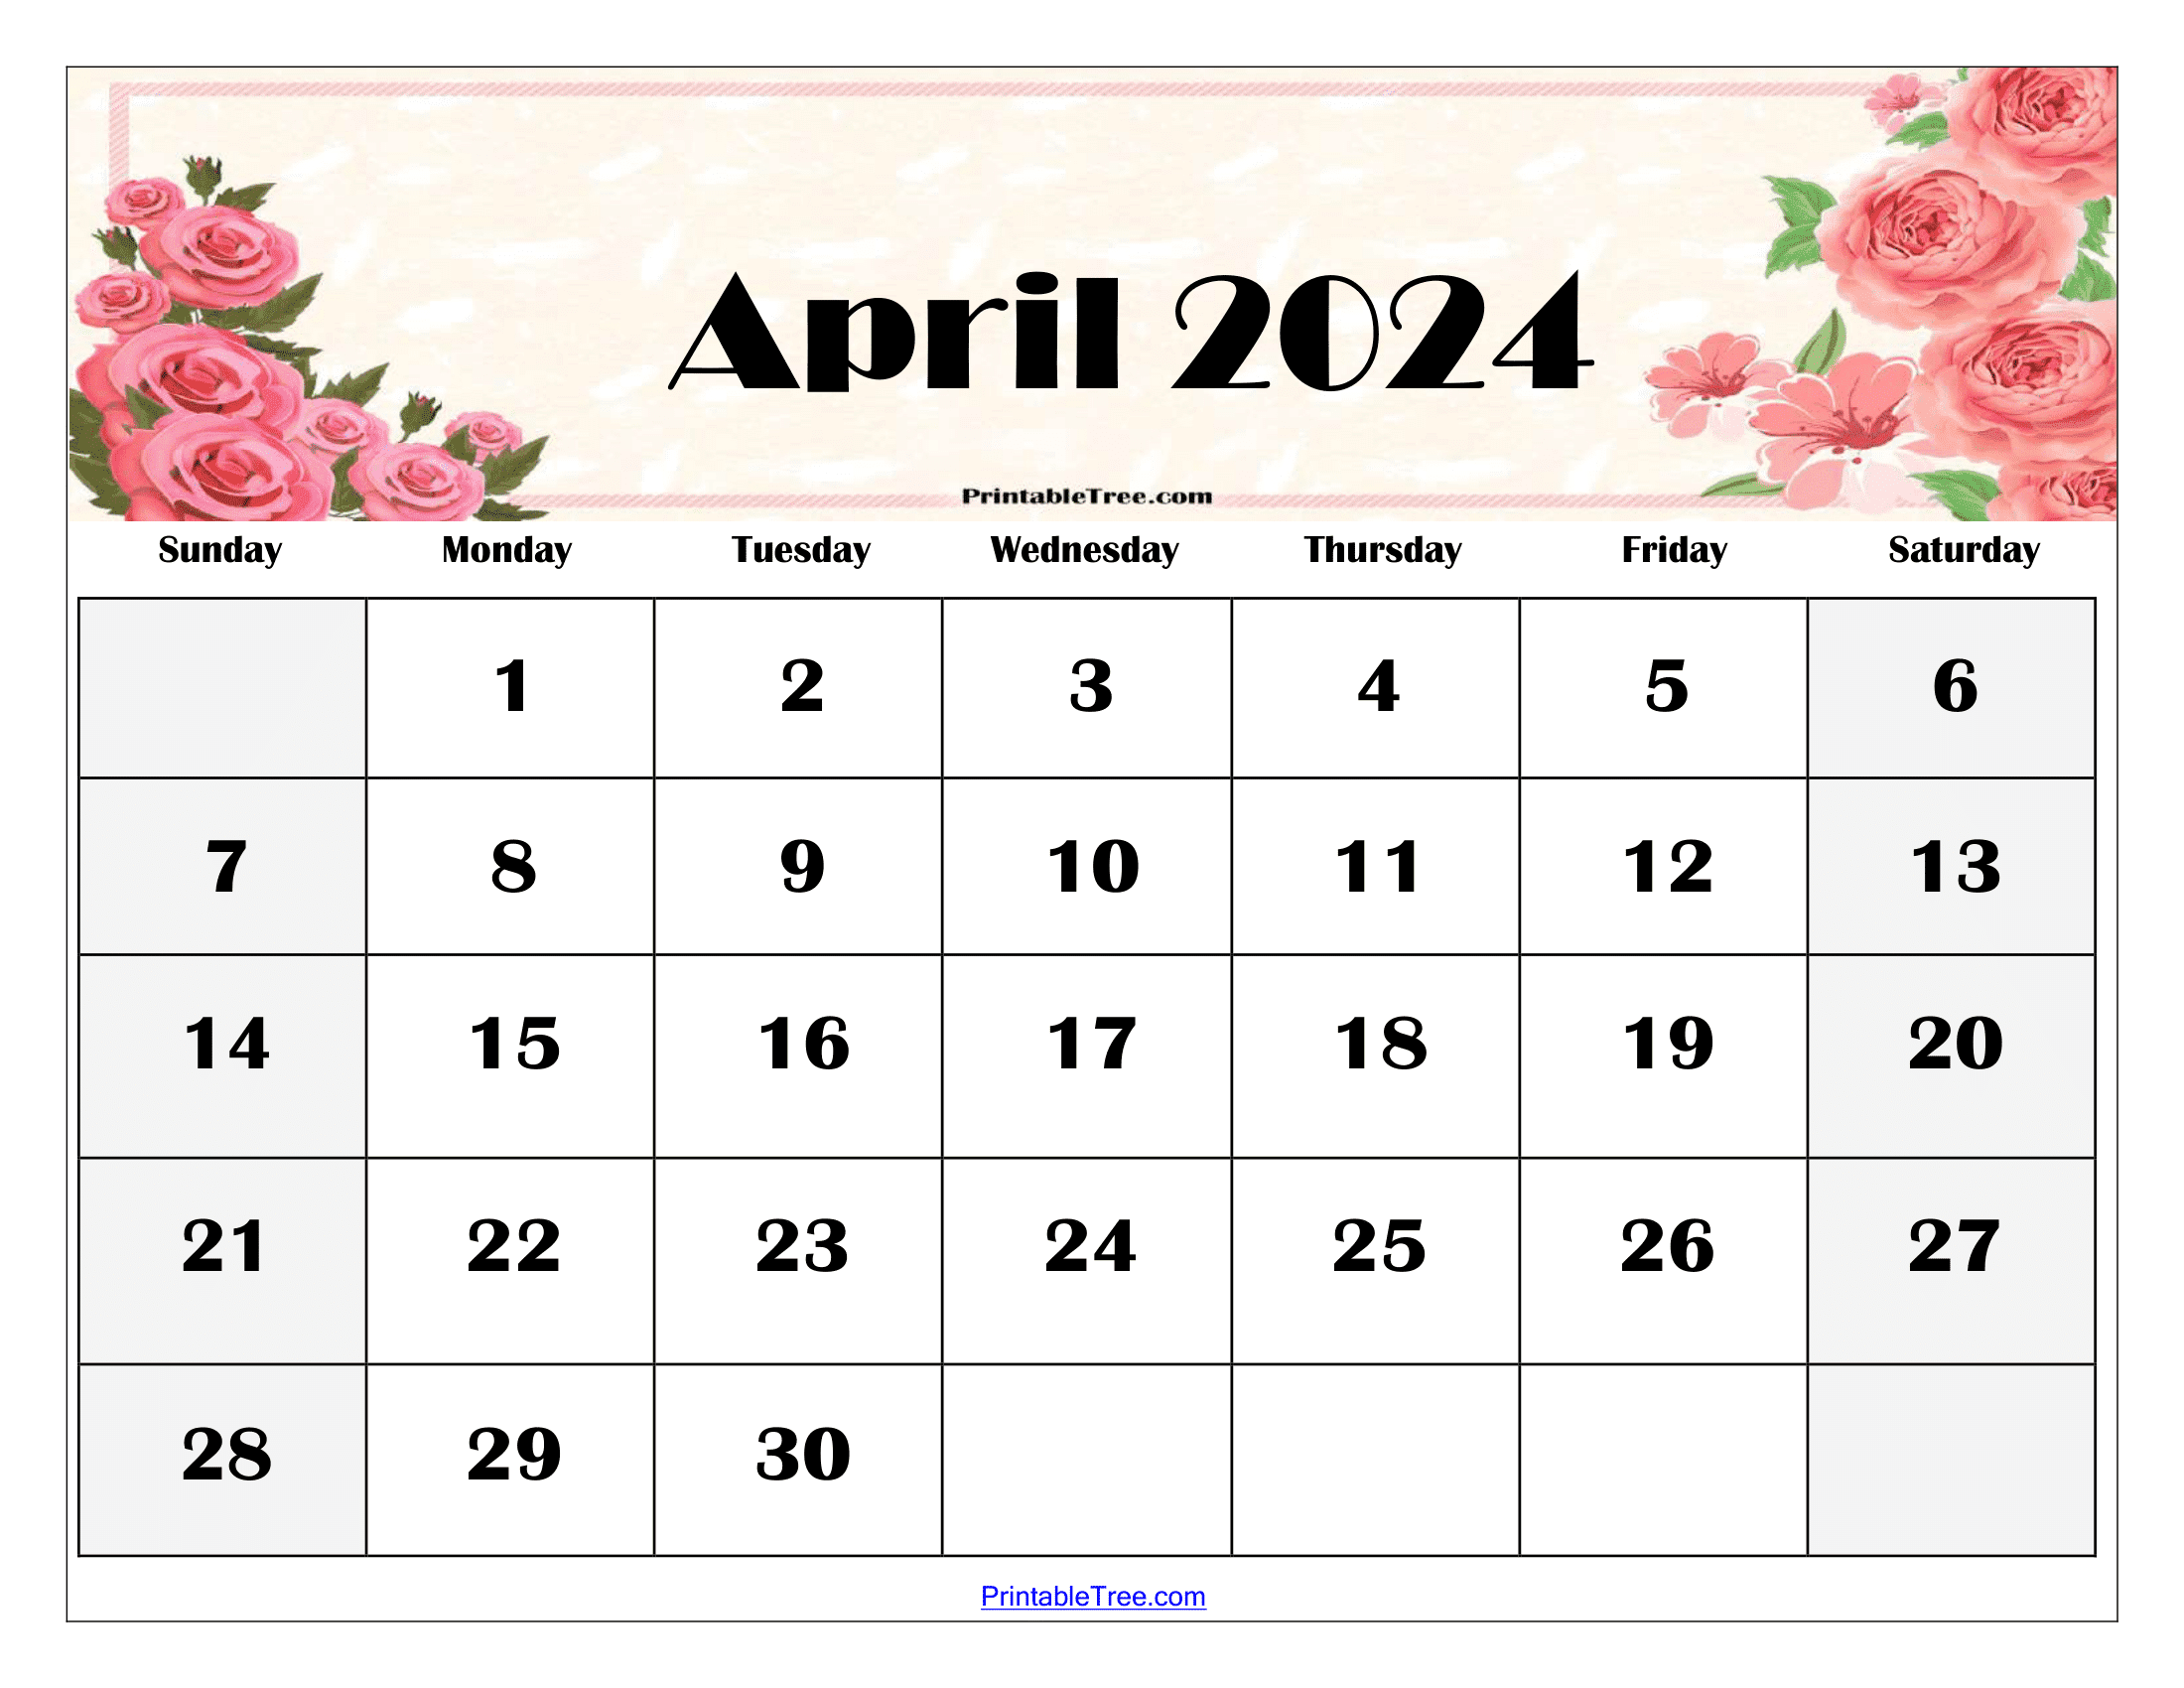 April 2024 Calendar Printable April Blank Calendar 2024 Easy To Use - Free Printable 2024 Calendar With Holidays April